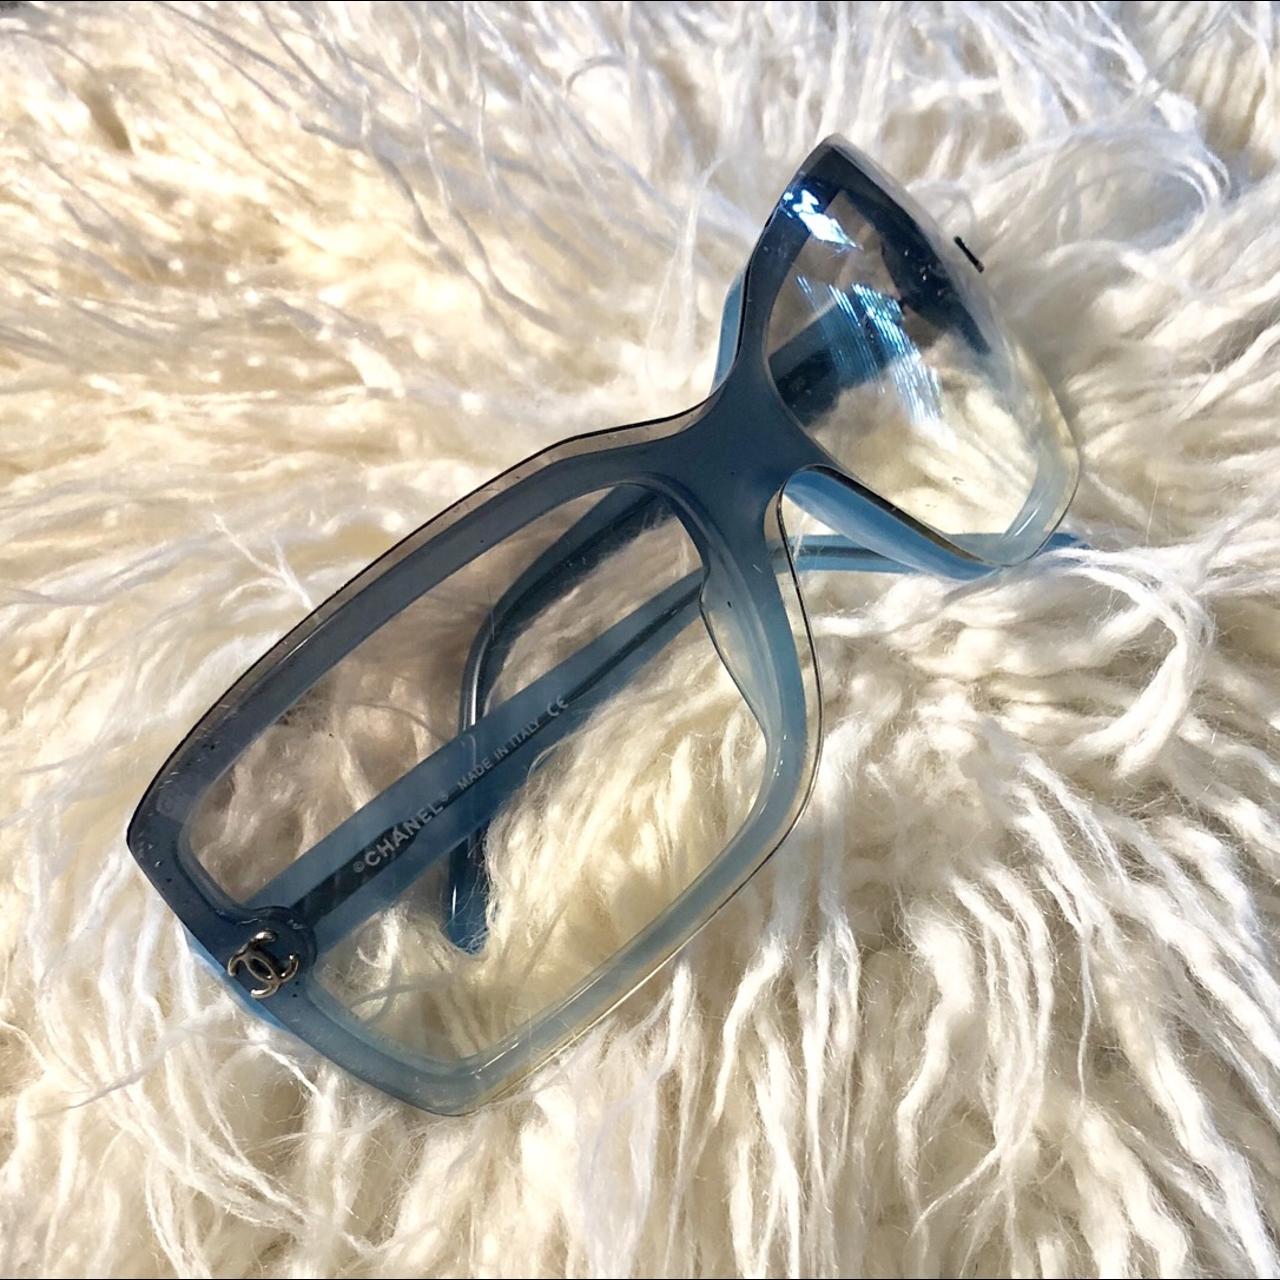 Chanel 4035 c. 167 6M Rainbow Lens Sunglasses